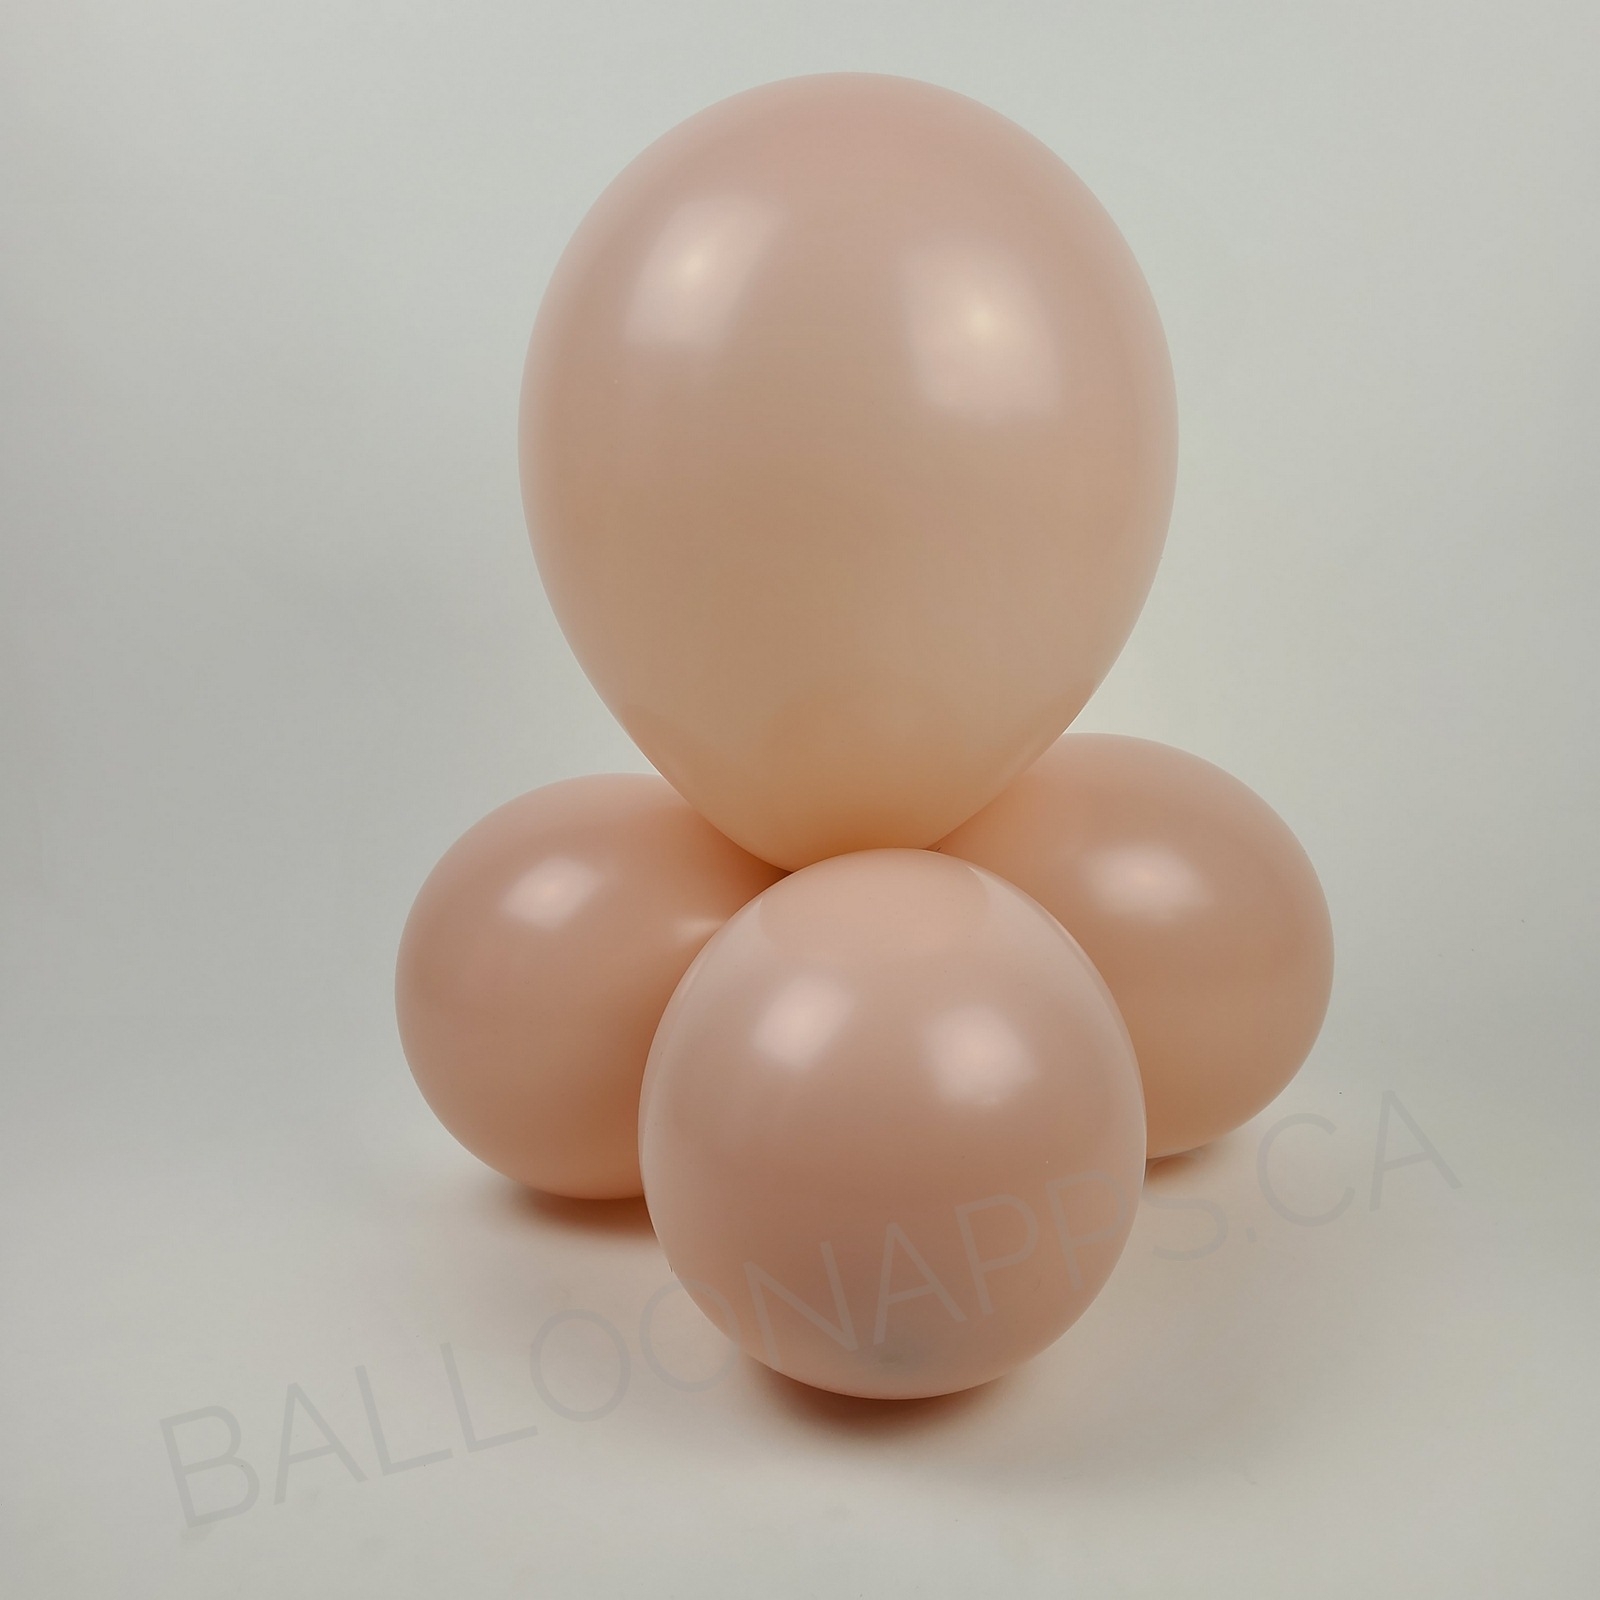 balloon texture SEM (25) 18